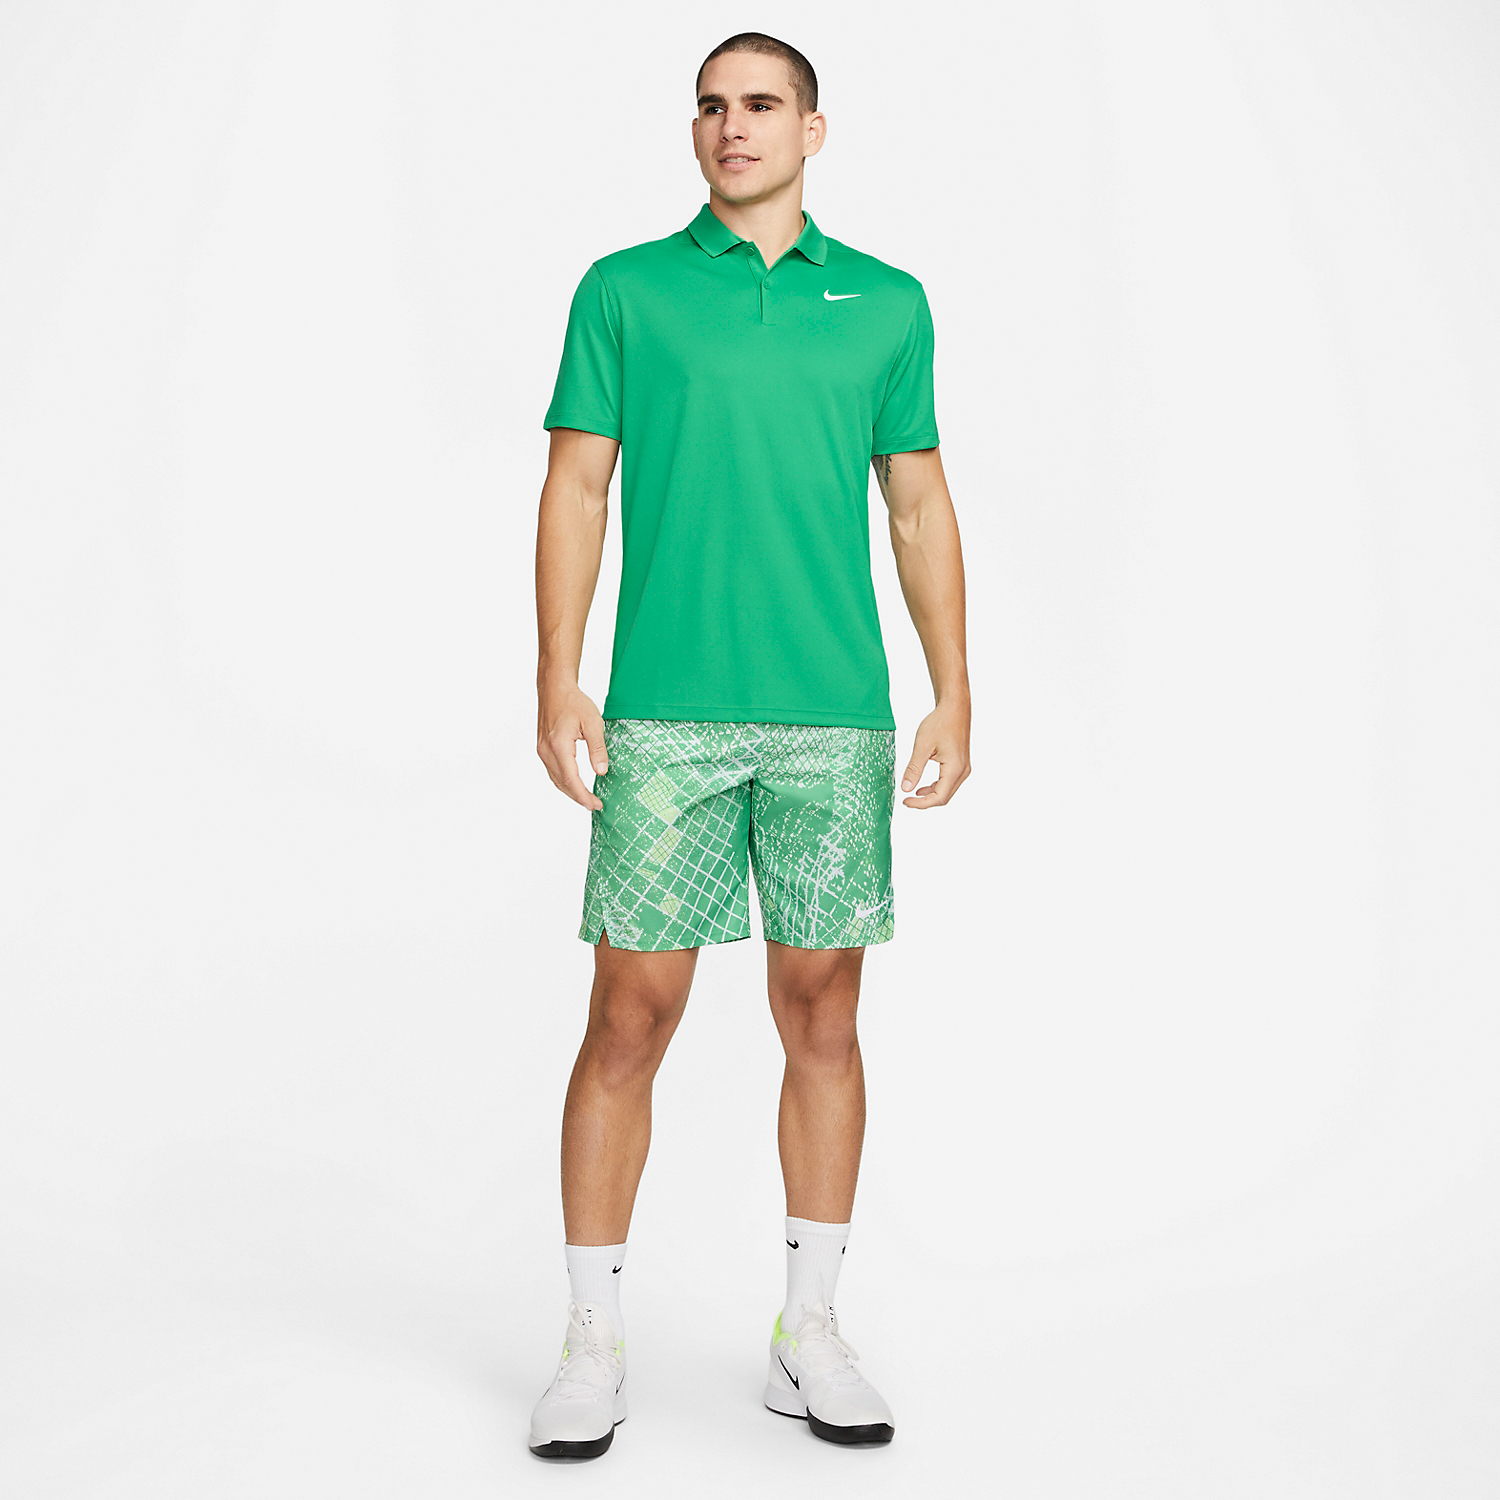 Nike Dri-FIT Classic Men's Tennis Polo - Stadium Green/White